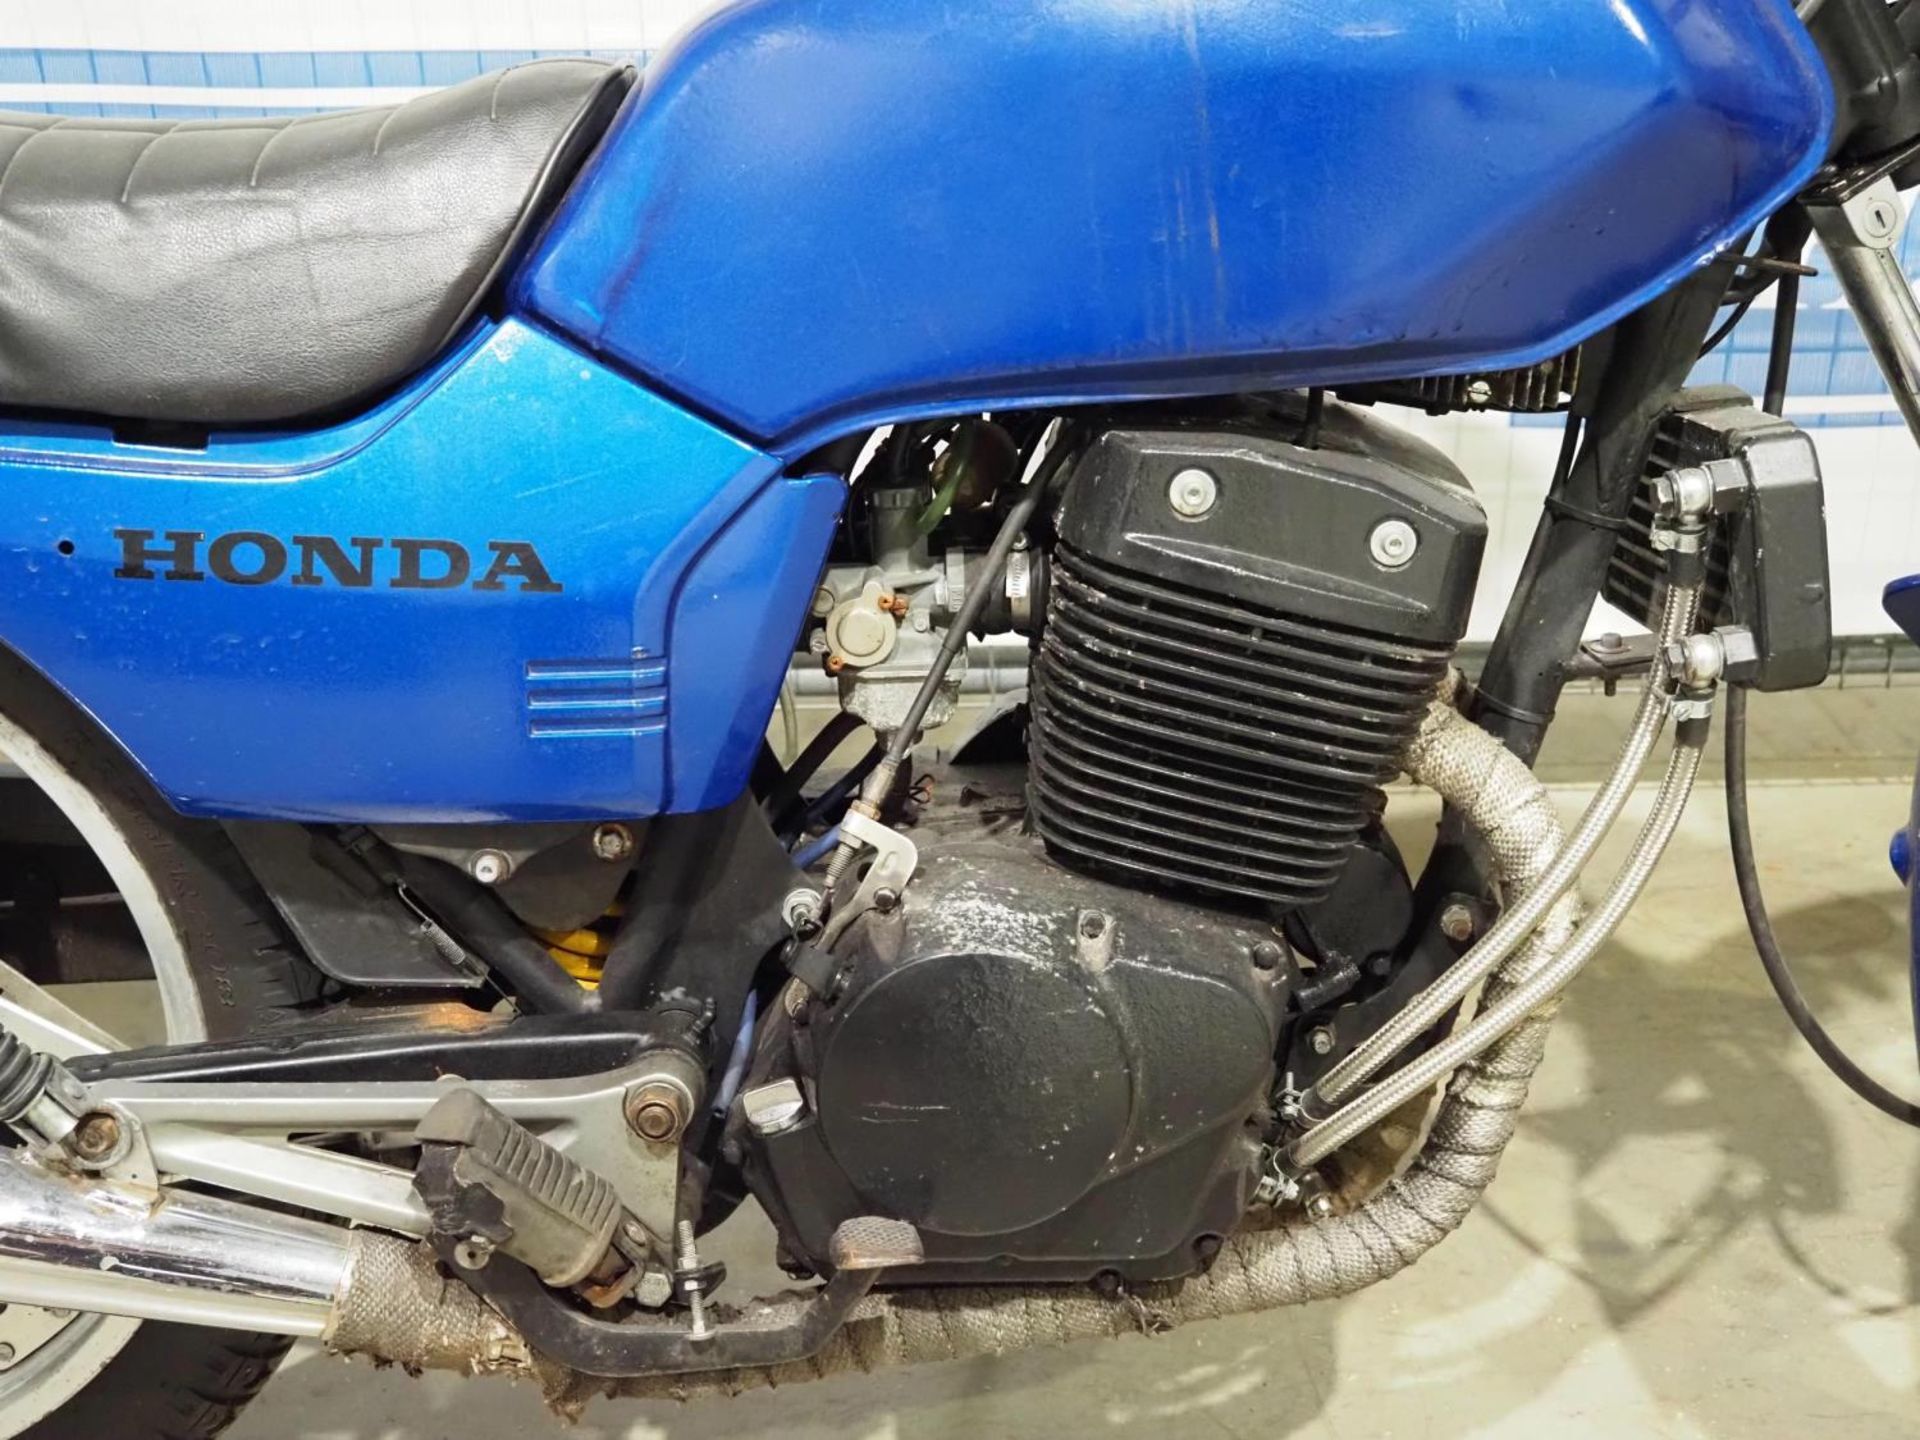 Honda CB125 motorcycle. 1983. 124cc. Reg. A183 PDO. V5 - Image 2 of 4